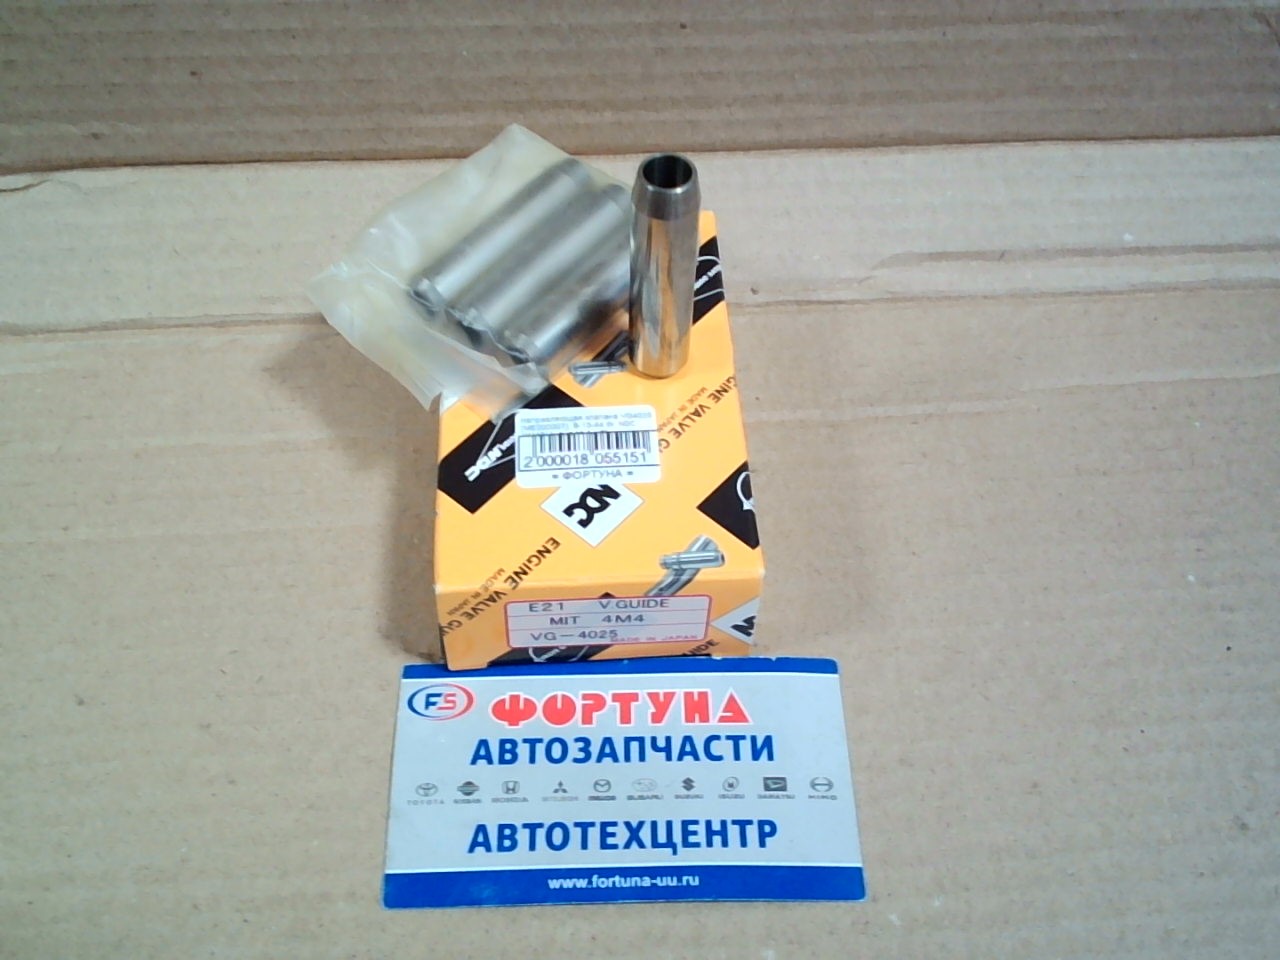 Направляющая клапана VG4025  (ME200007)  8-13-44 IN  NDC  /4M40/ (цена за 1 шт) на  